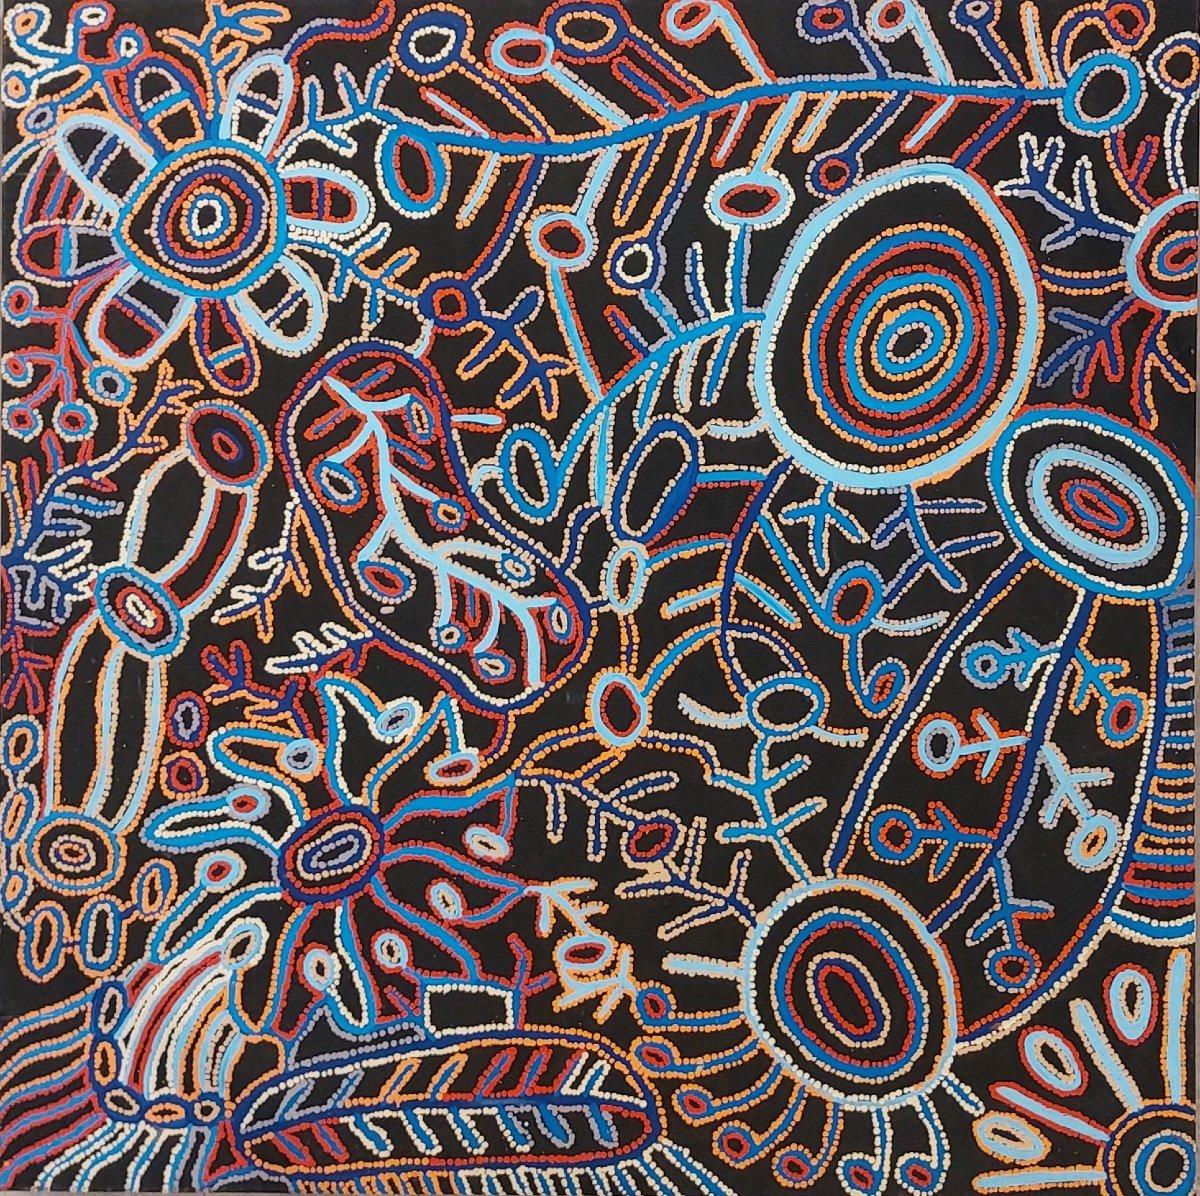 Hand-Painted 'Vaughan Springs Dreaming Pikilyi' Aboriginal Painting by Faye Nangala Hudson For Sale